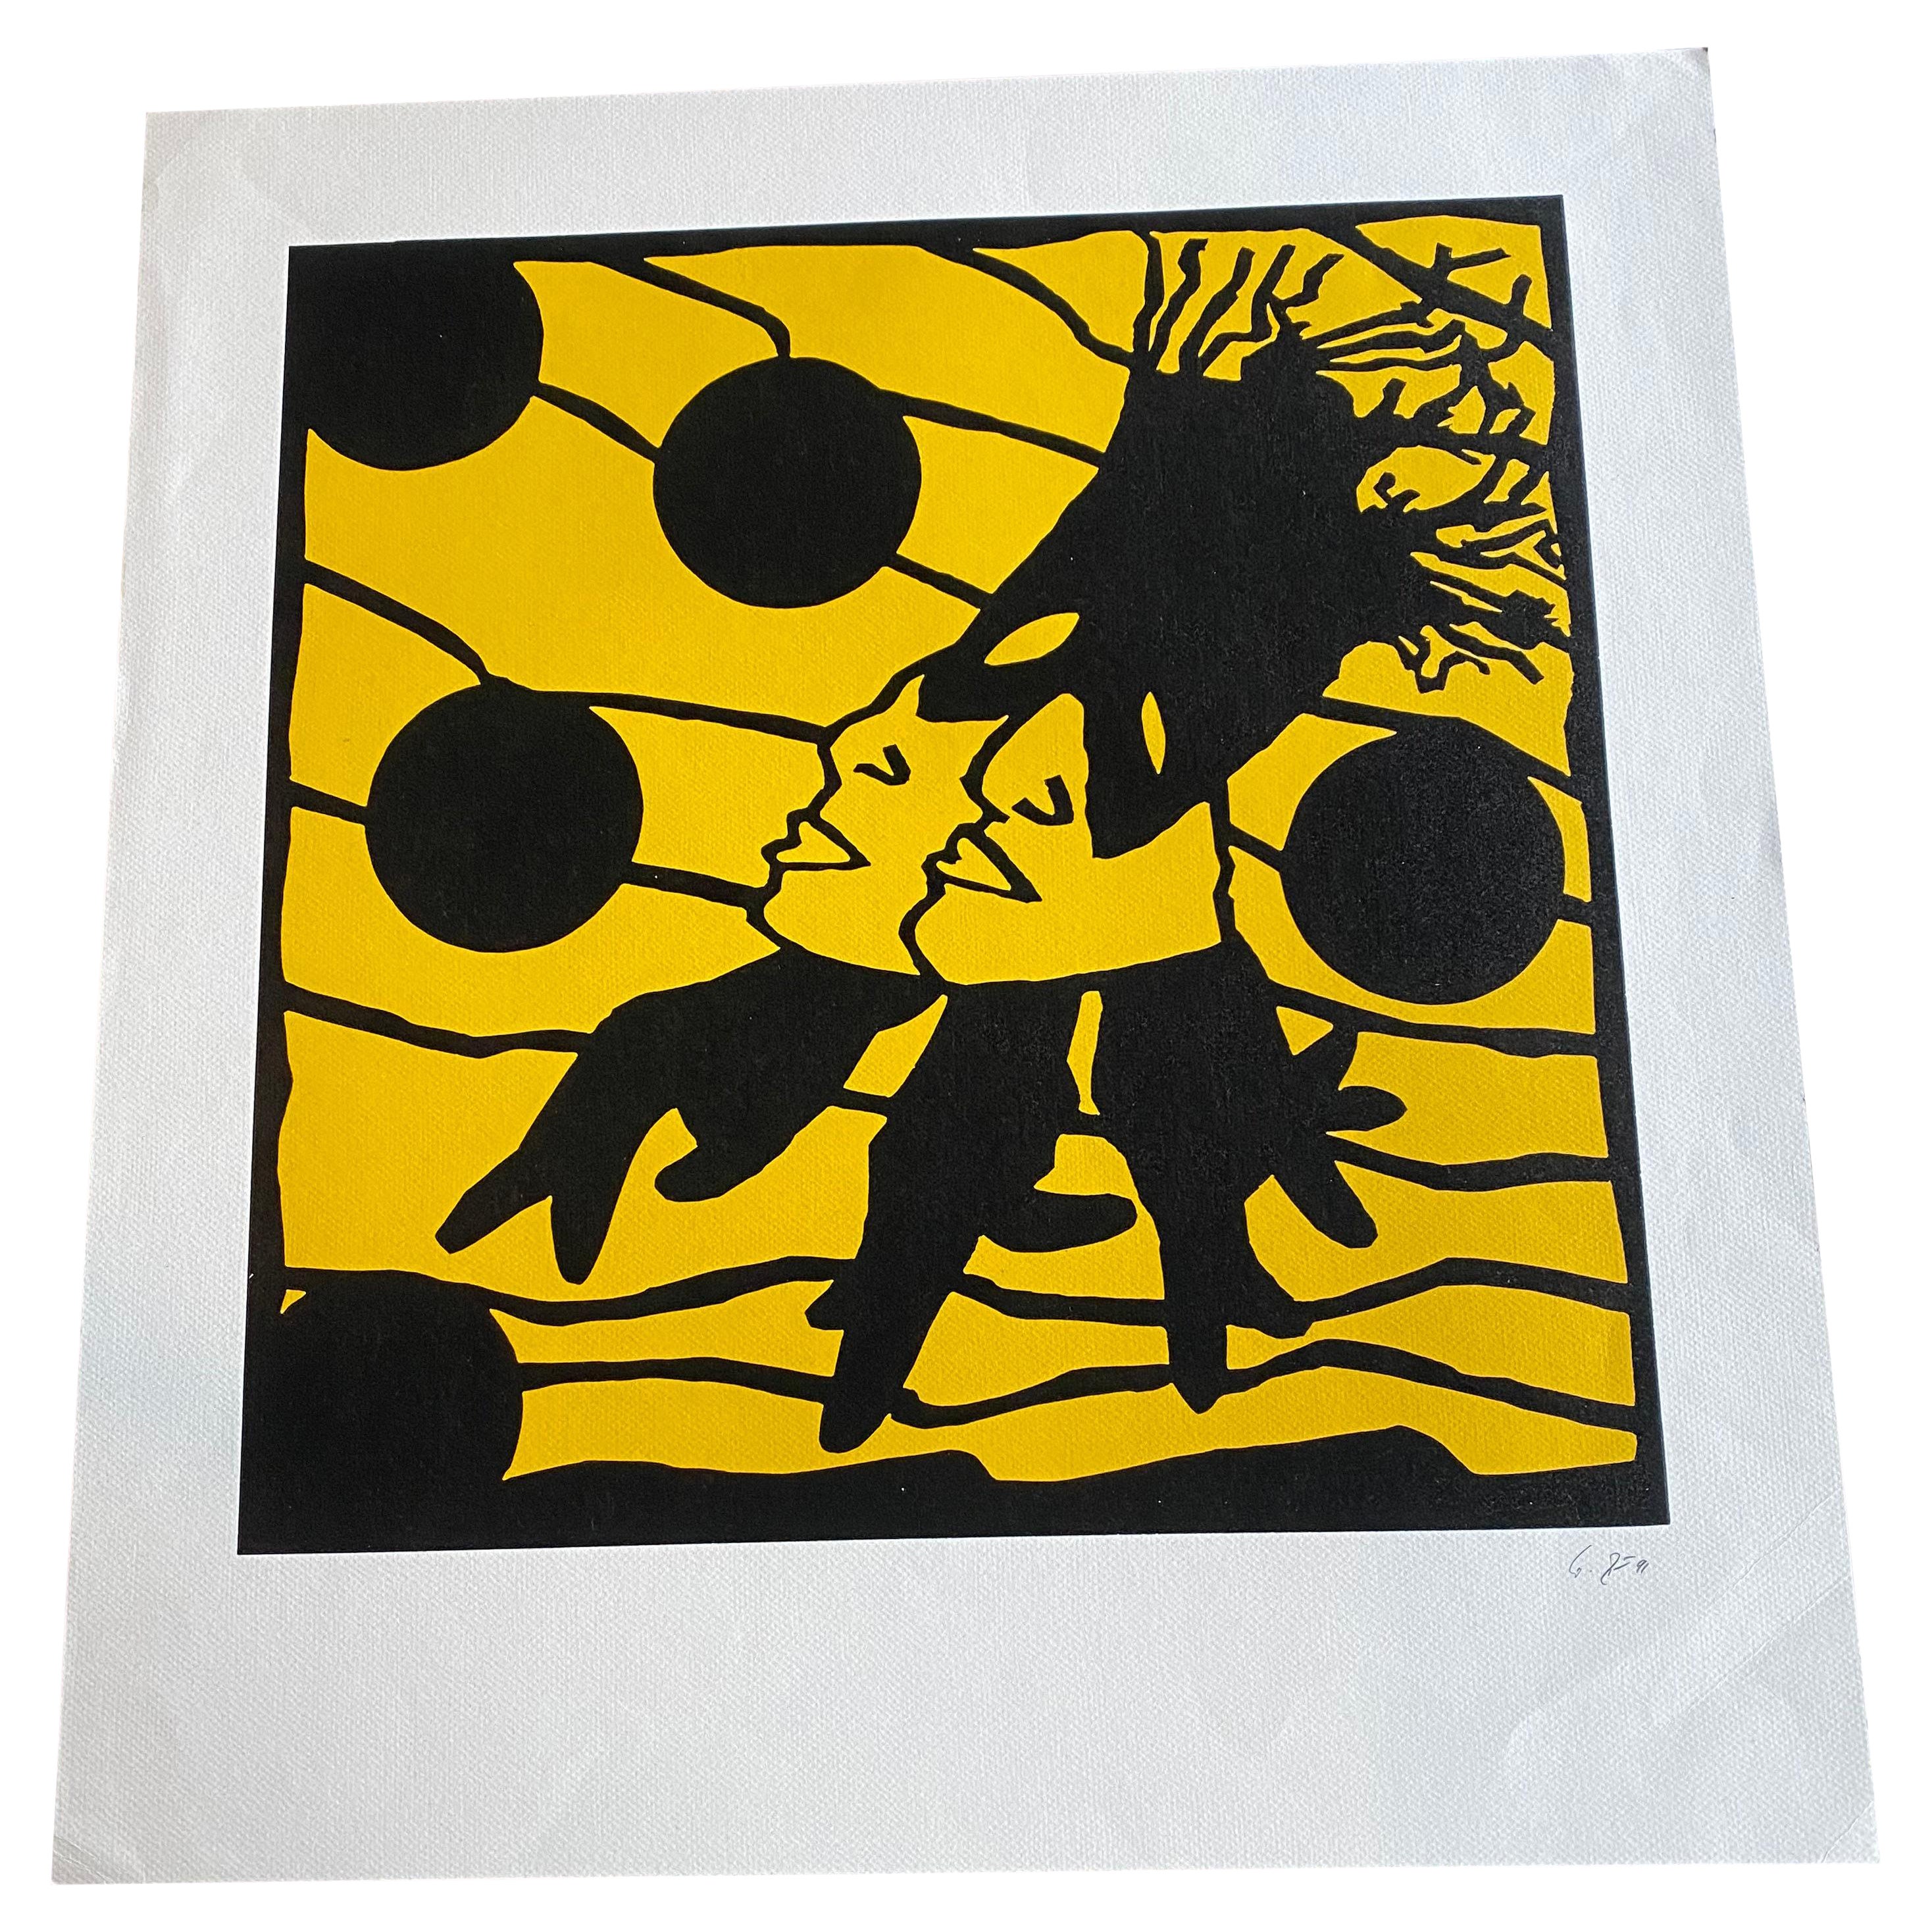 Original Color Linocut by Werner Büttner "Nachleben" in Yellow and Black For Sale